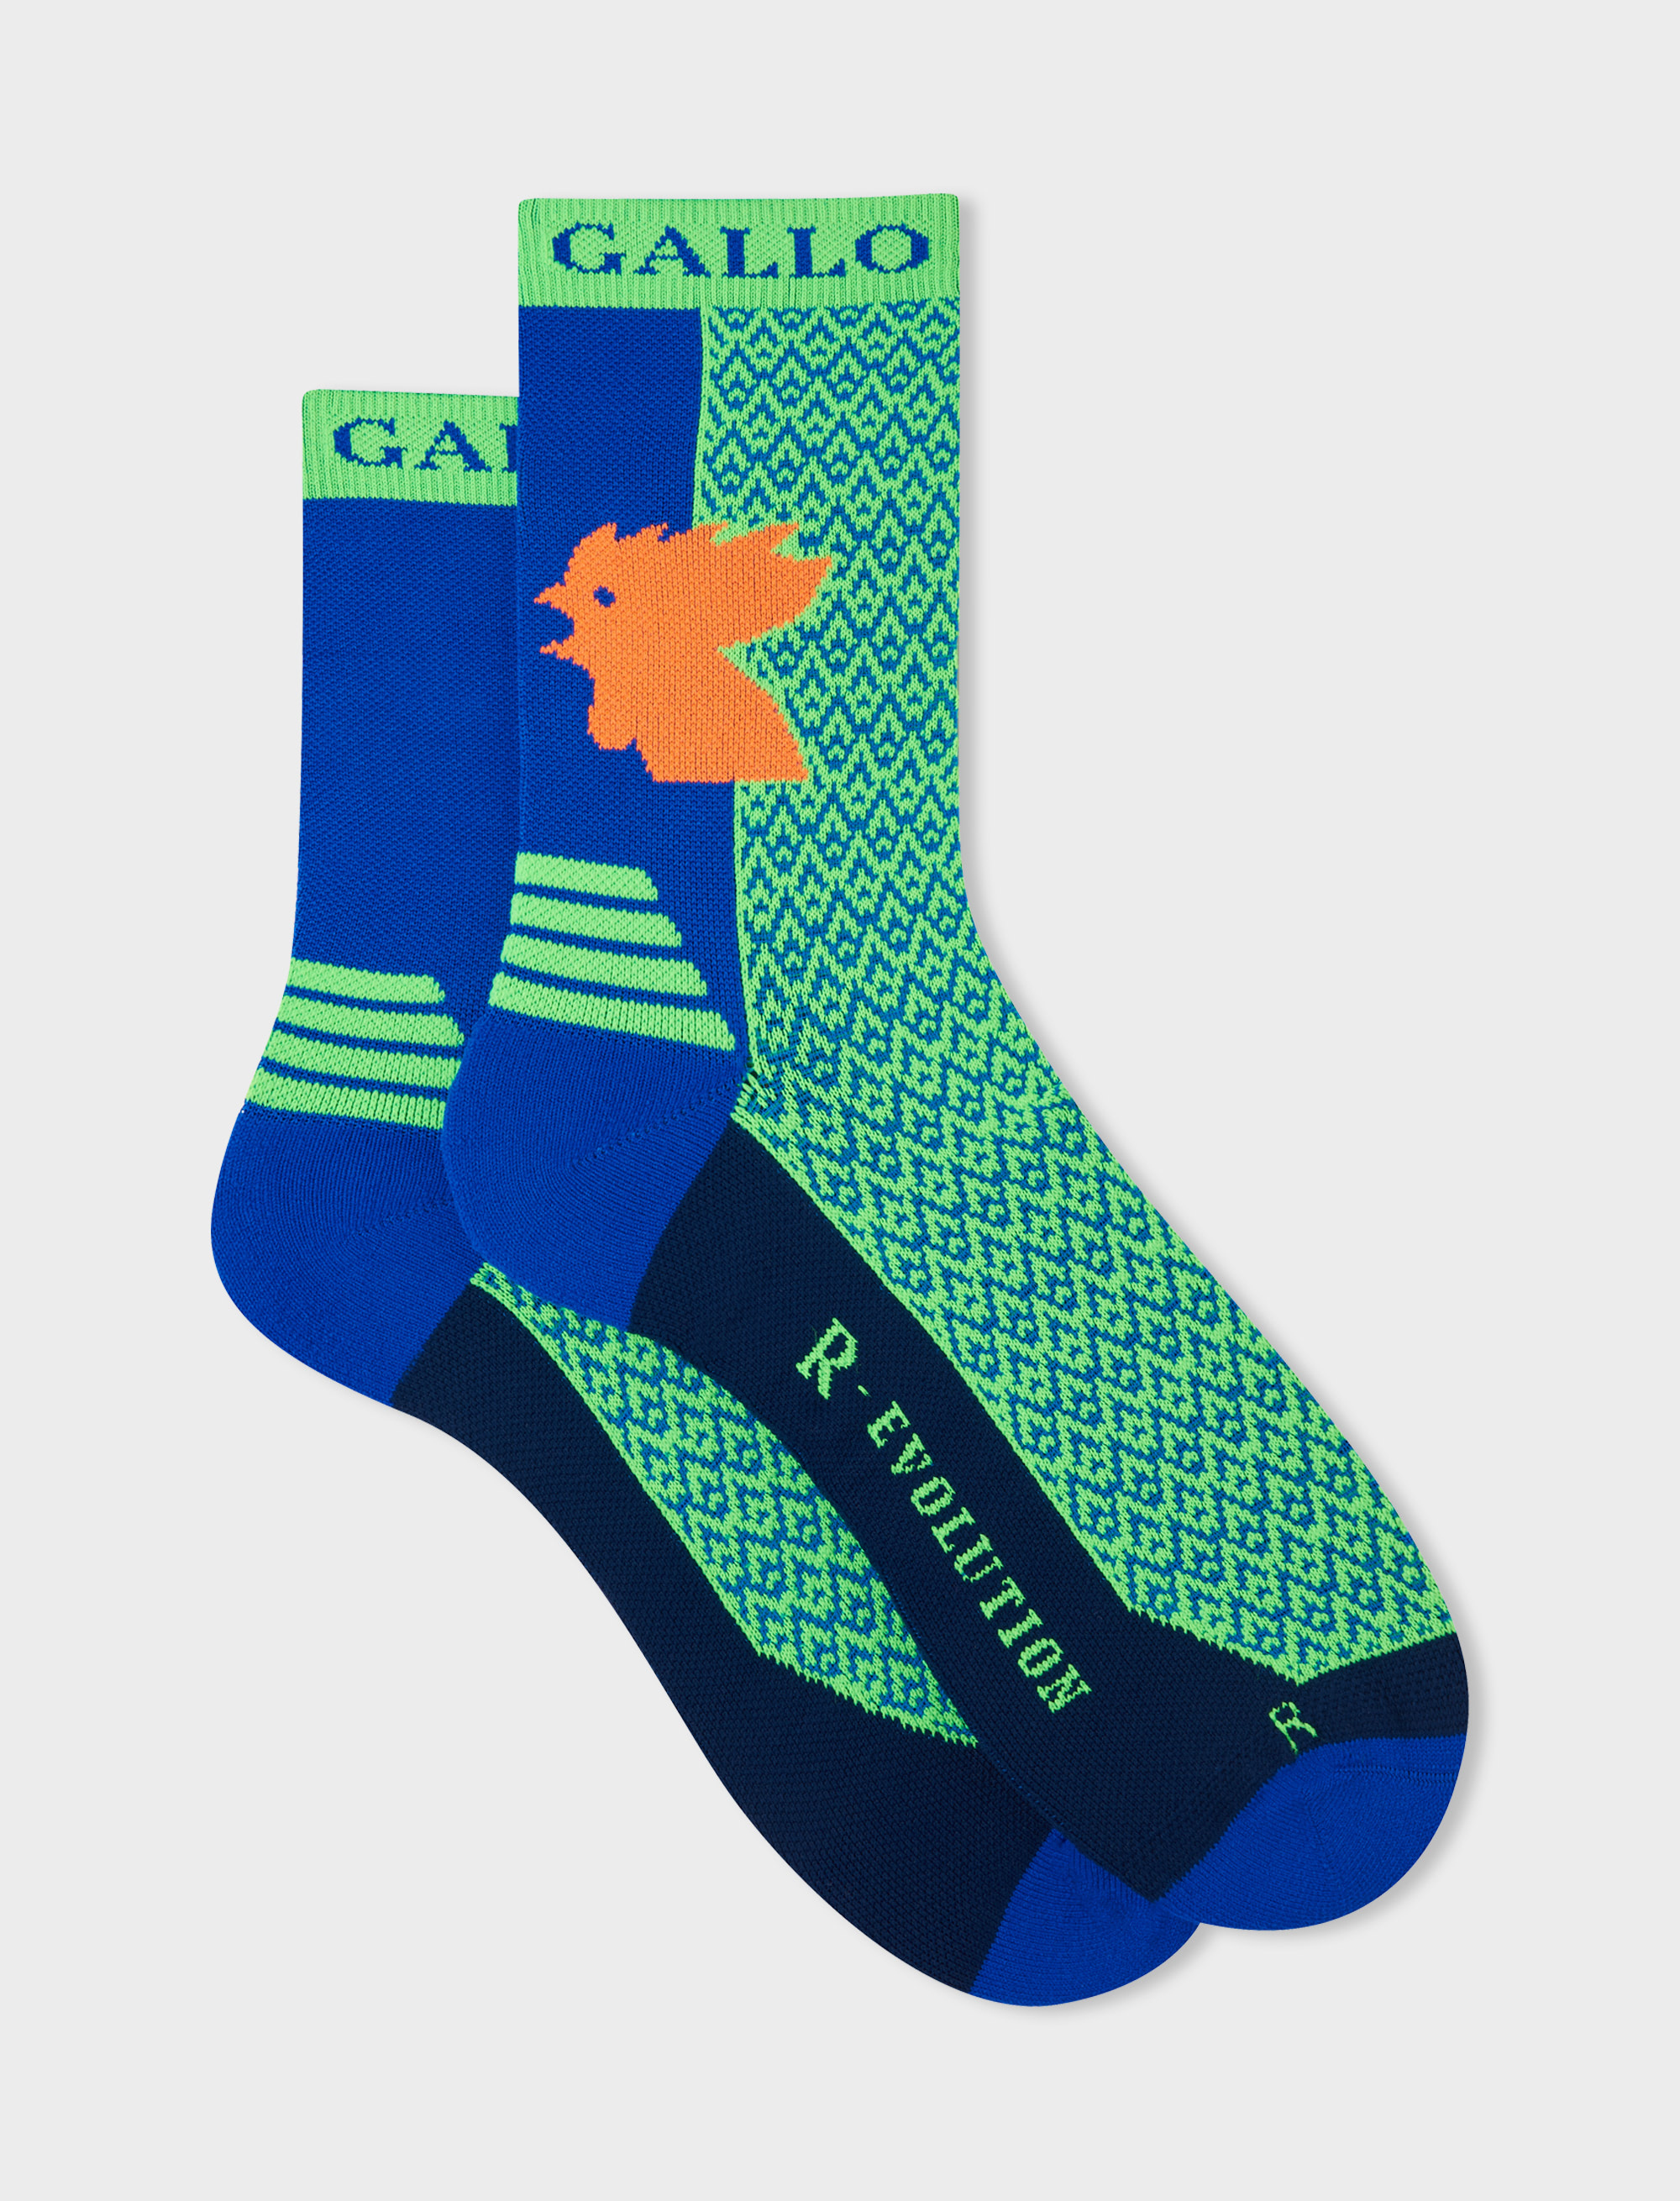 vogn Neuropati betalingsmiddel Men's short technical neon green socks with small triangles | Gallo